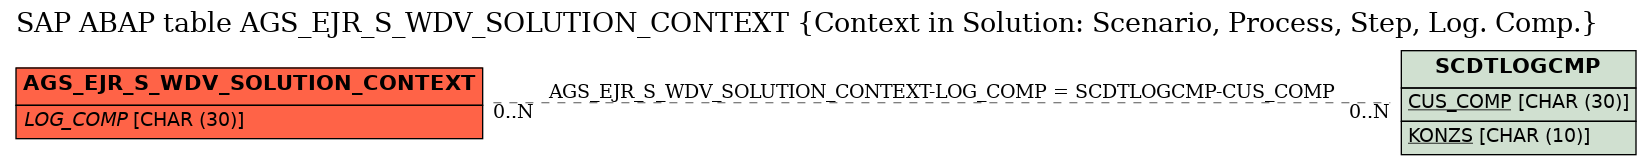 E-R Diagram for table AGS_EJR_S_WDV_SOLUTION_CONTEXT (Context in Solution: Scenario, Process, Step, Log. Comp.)